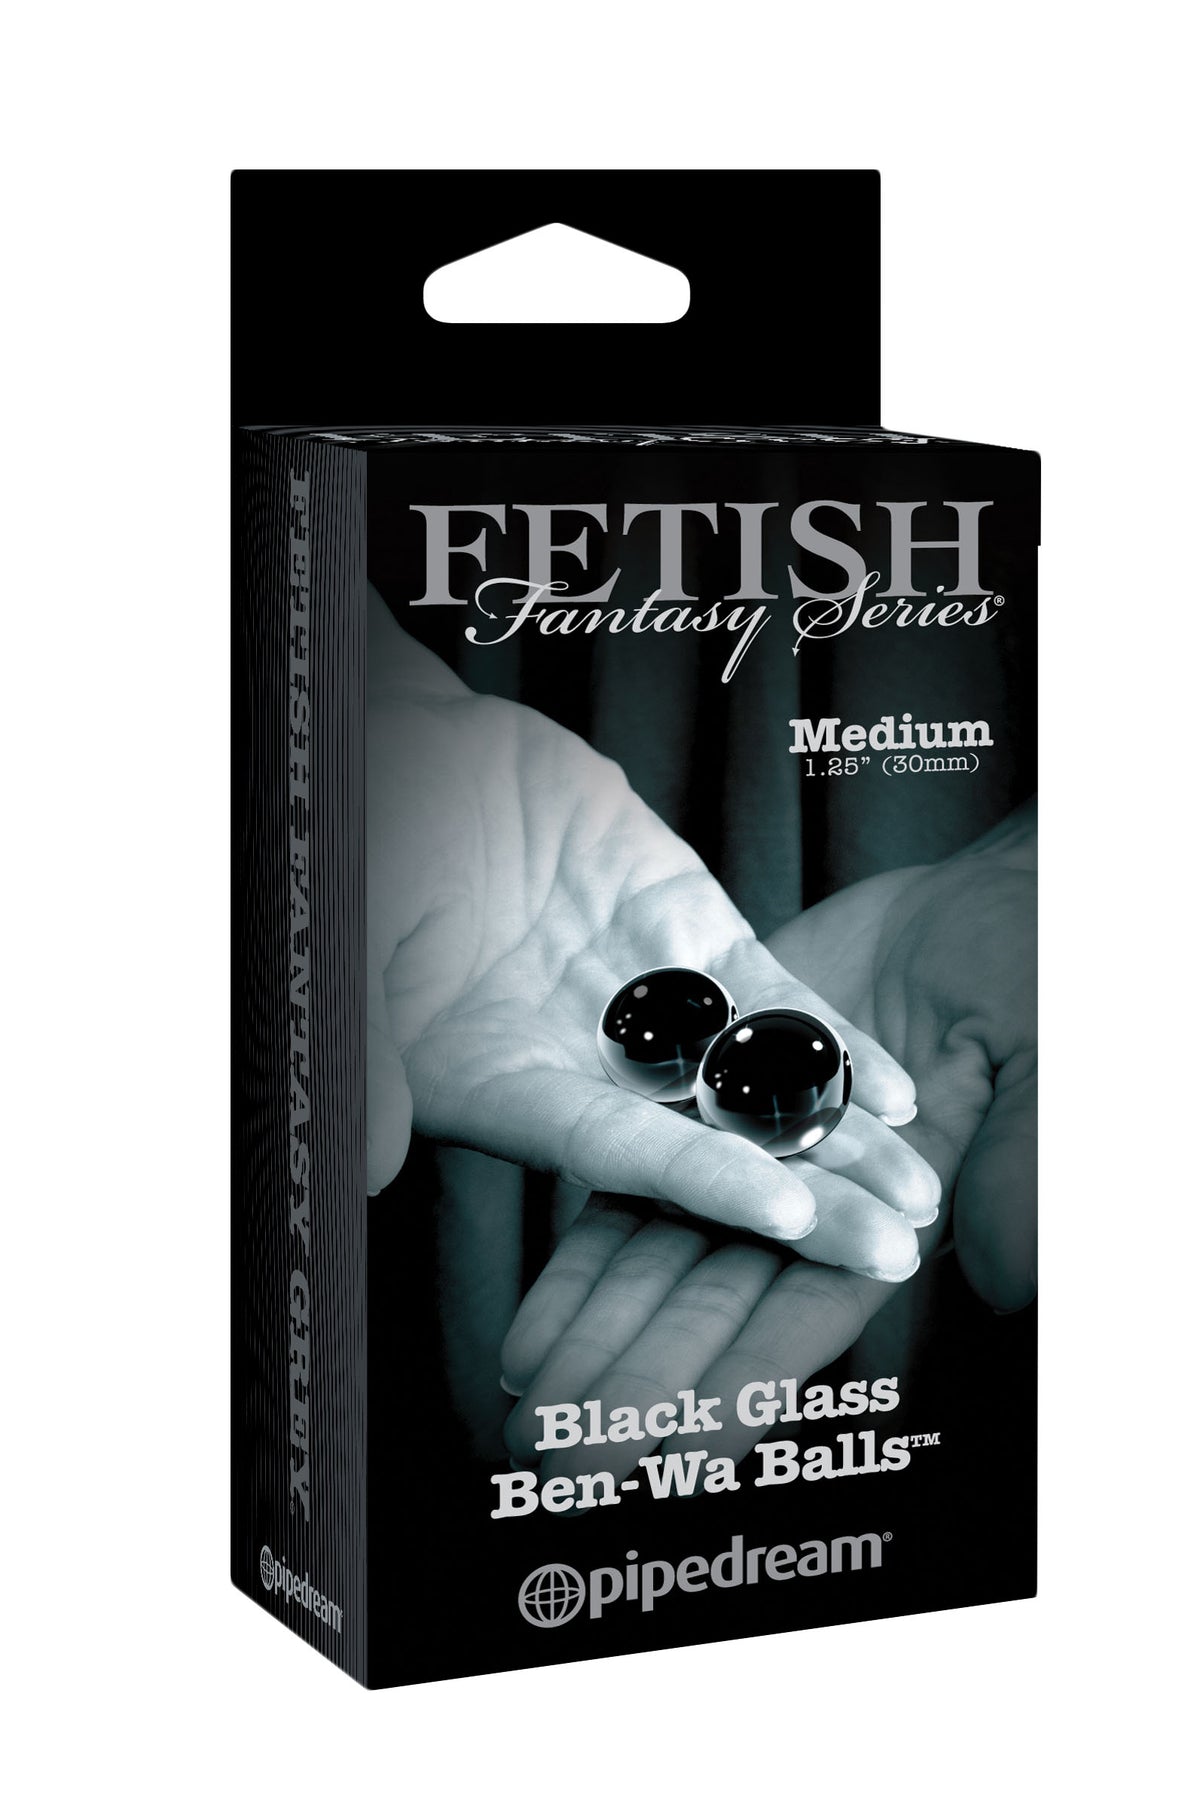 Fetish Fantasy Limited Edition Med Glass Ben Wa Balls